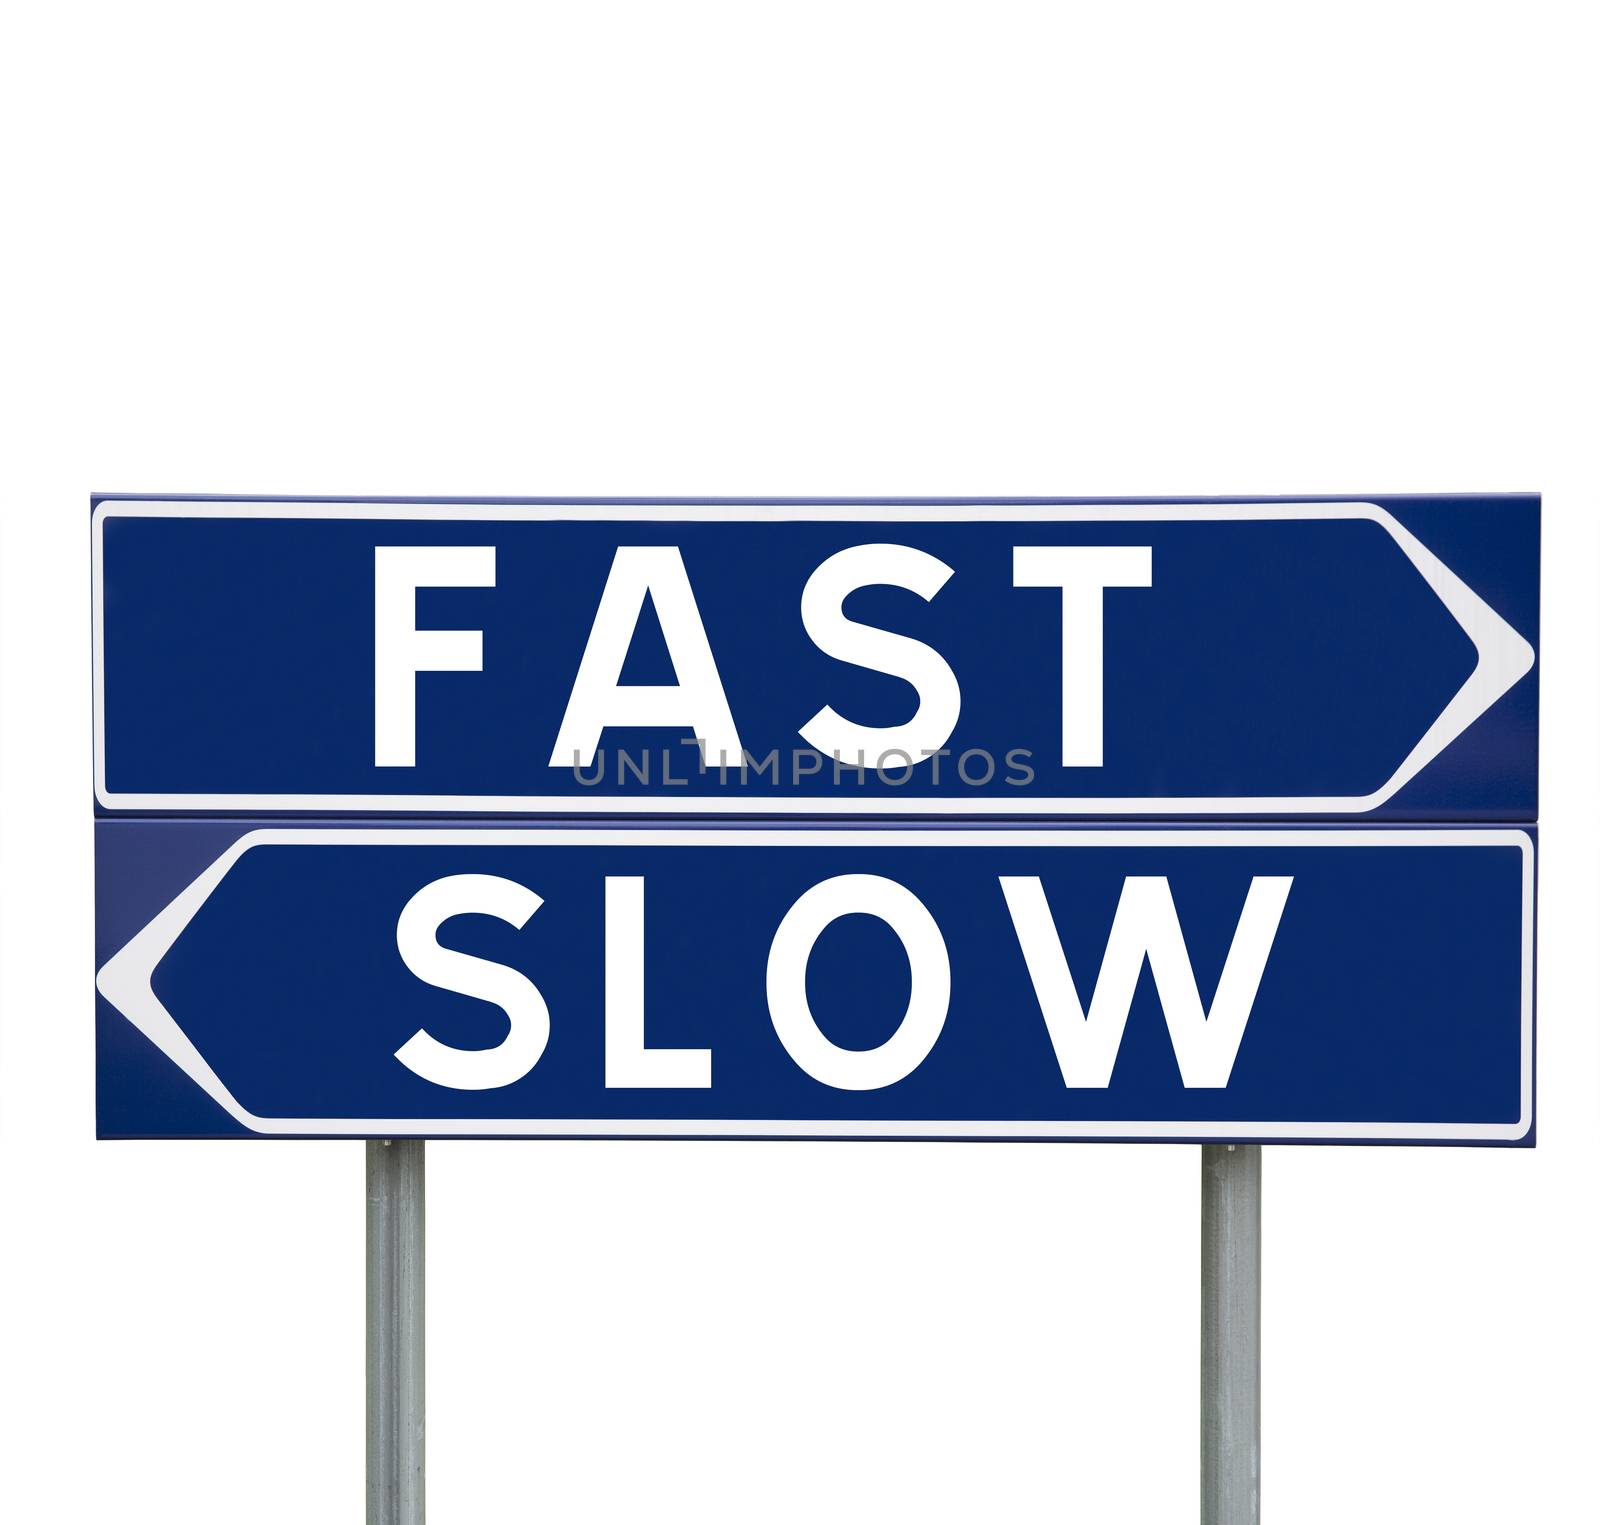 Fast or slow by gemenacom